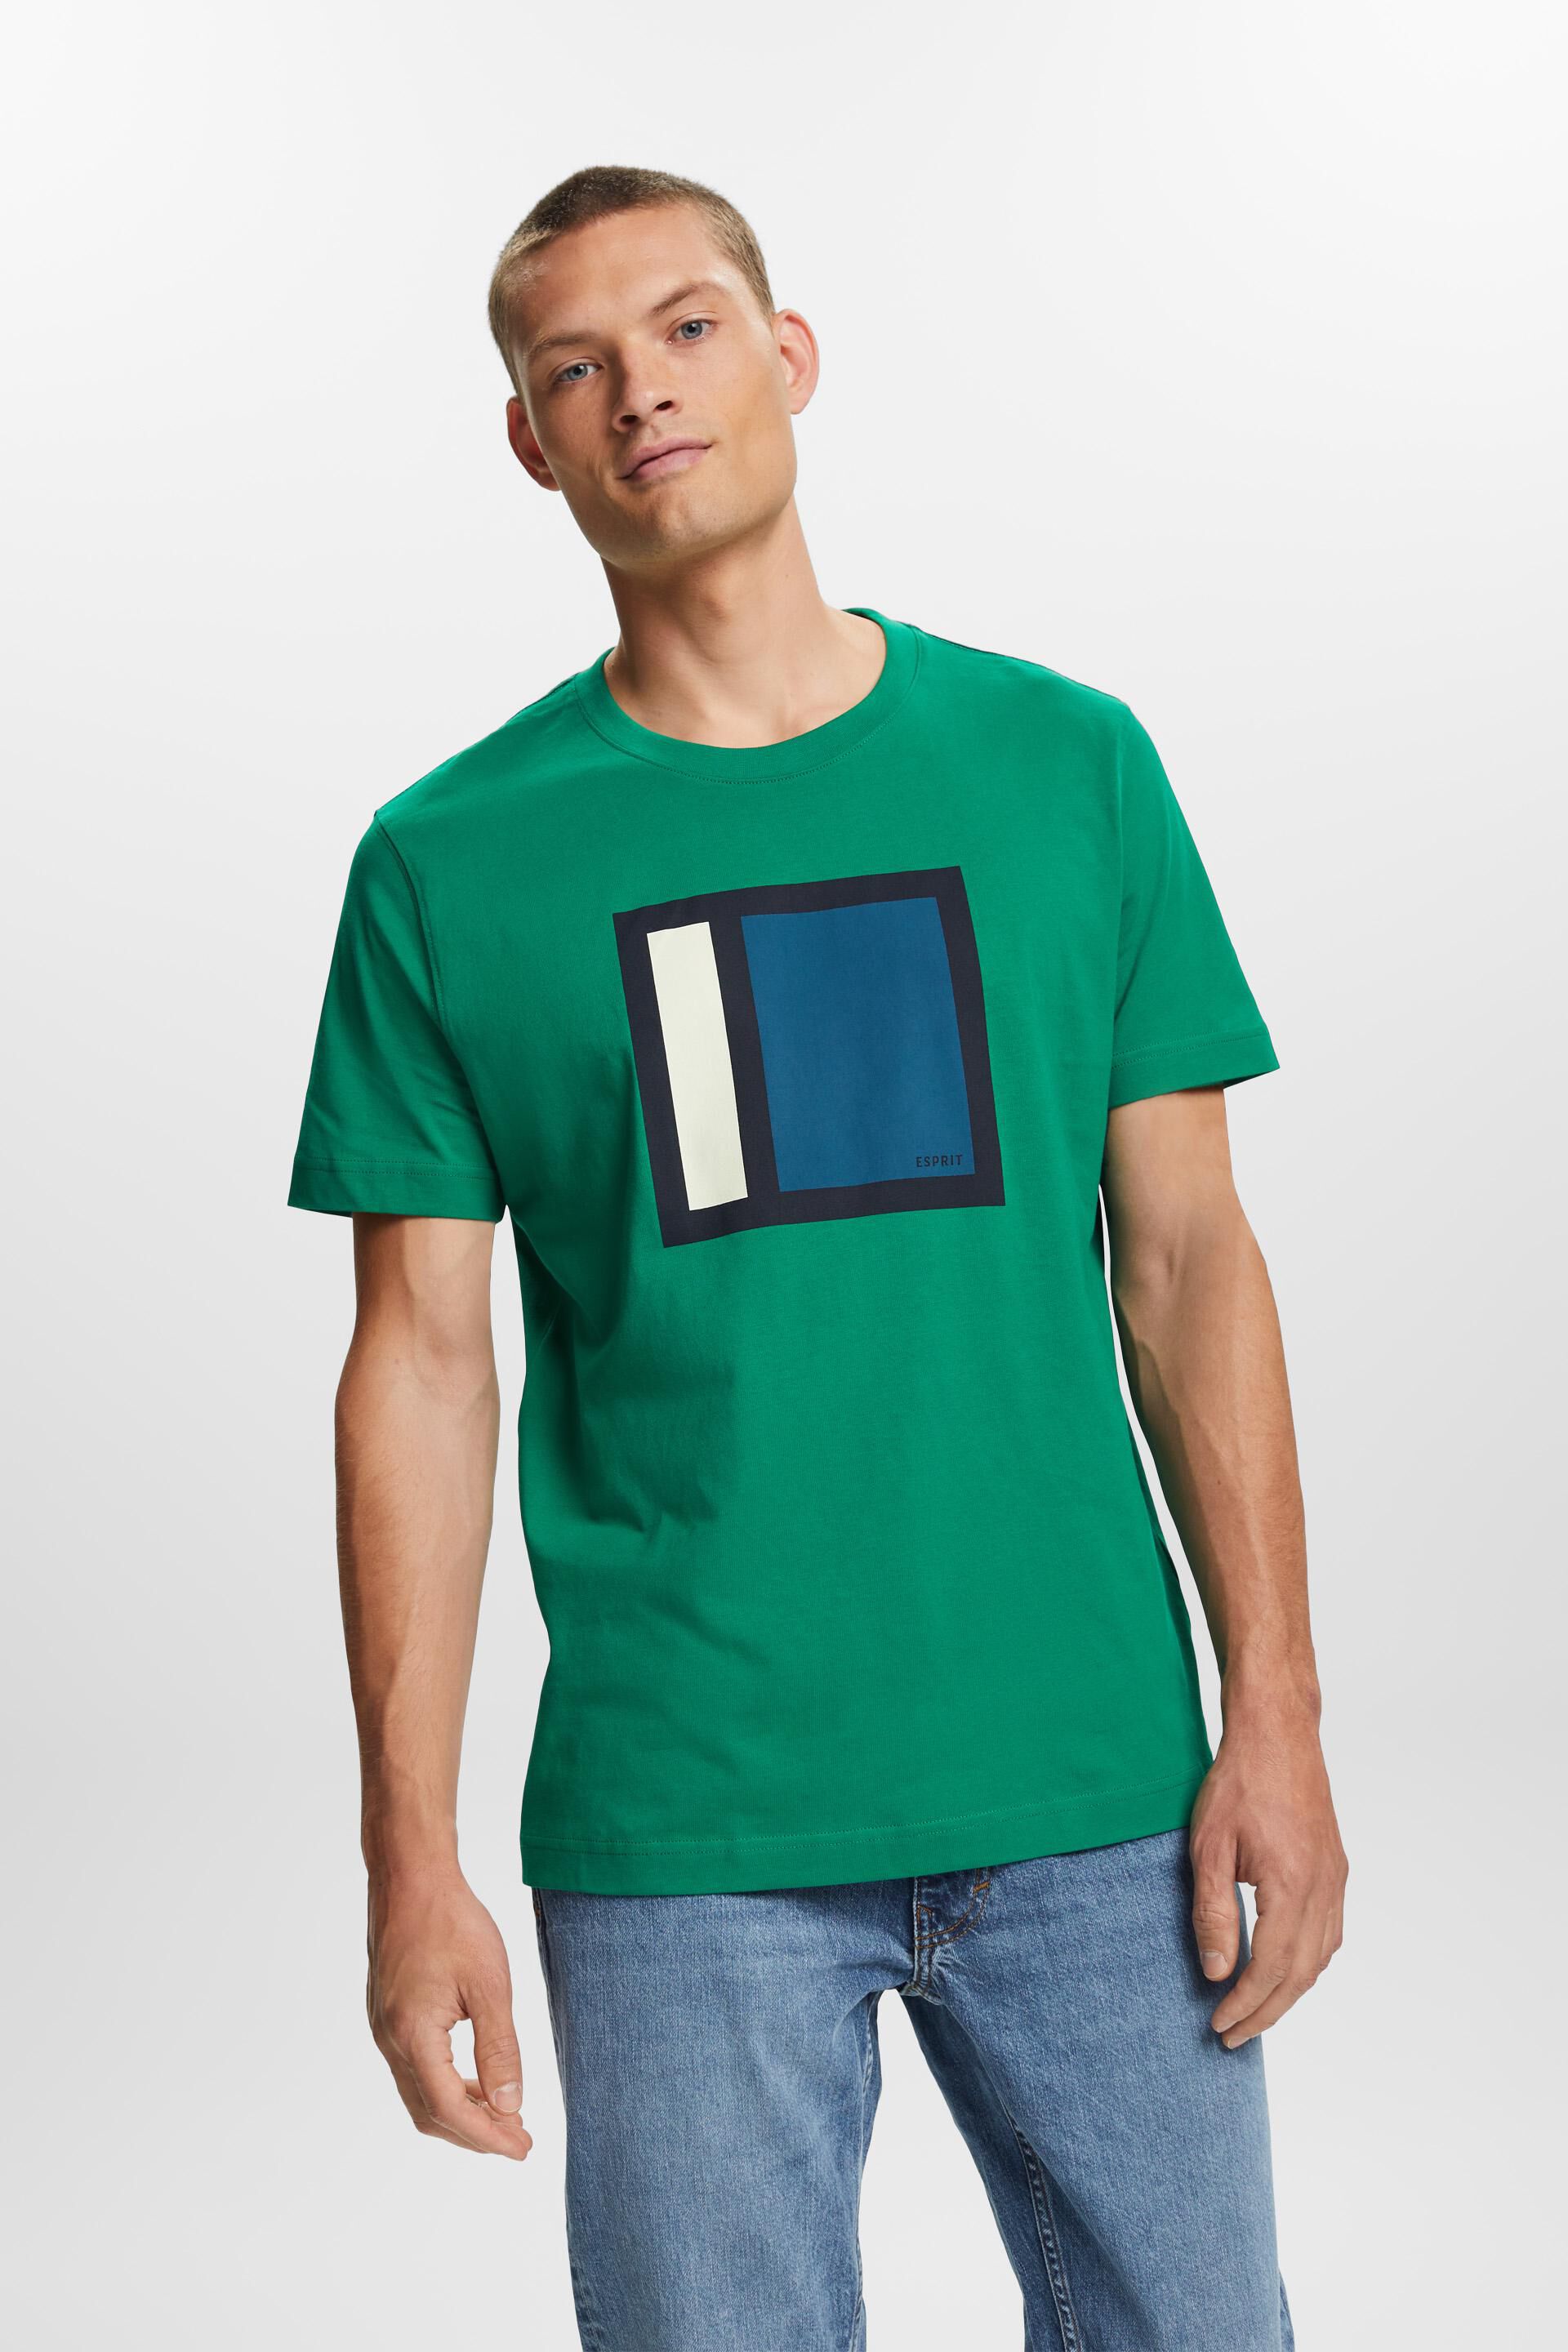 Esprit cotton with 100% print, T-shirt Jersey